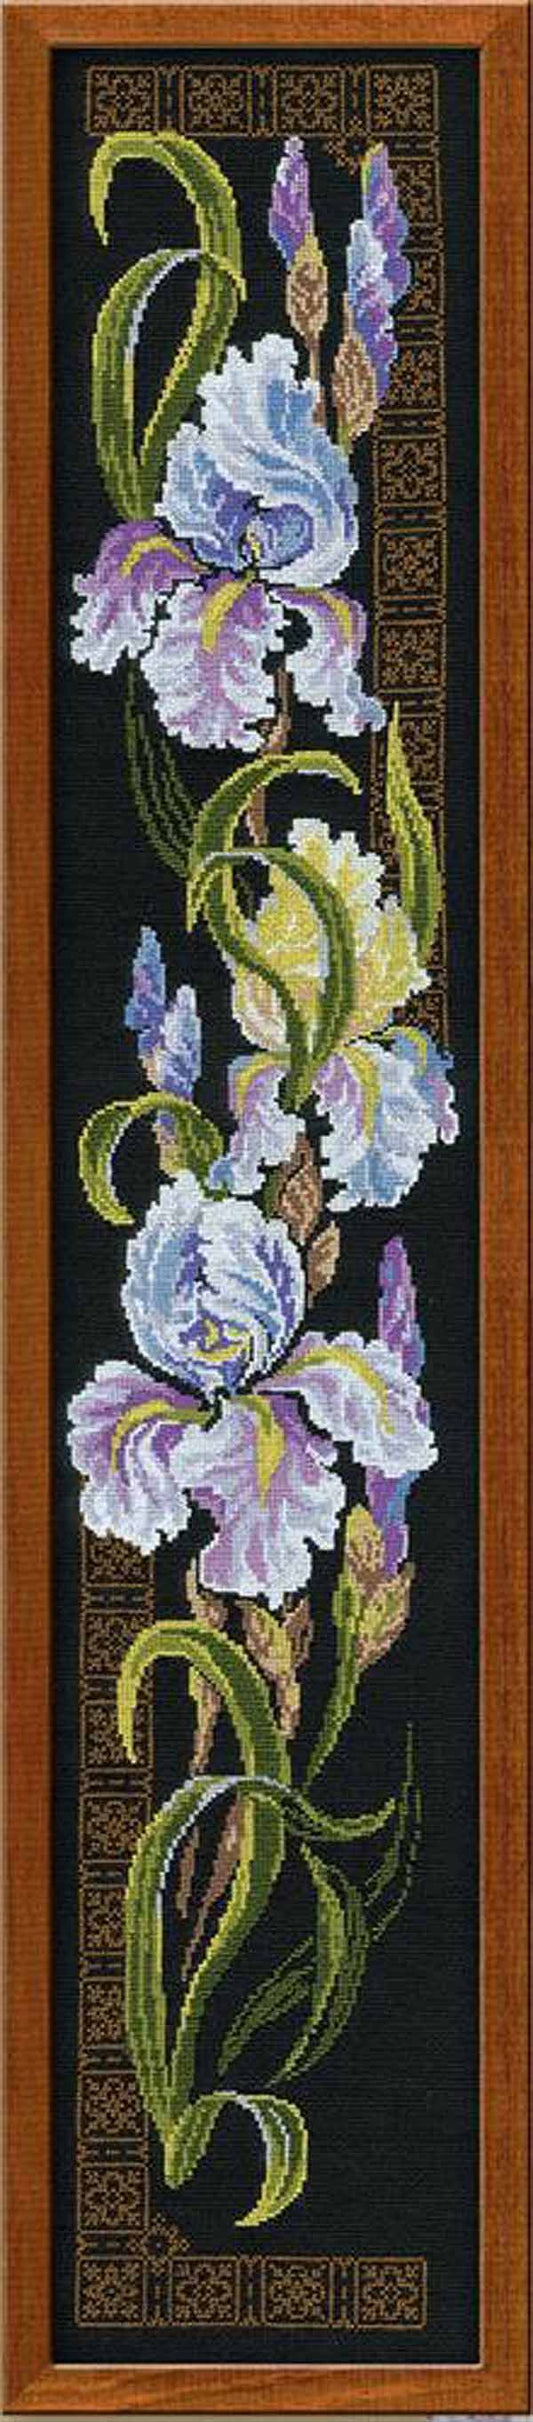 Irises Cross Stitch Kit By RIOLIS